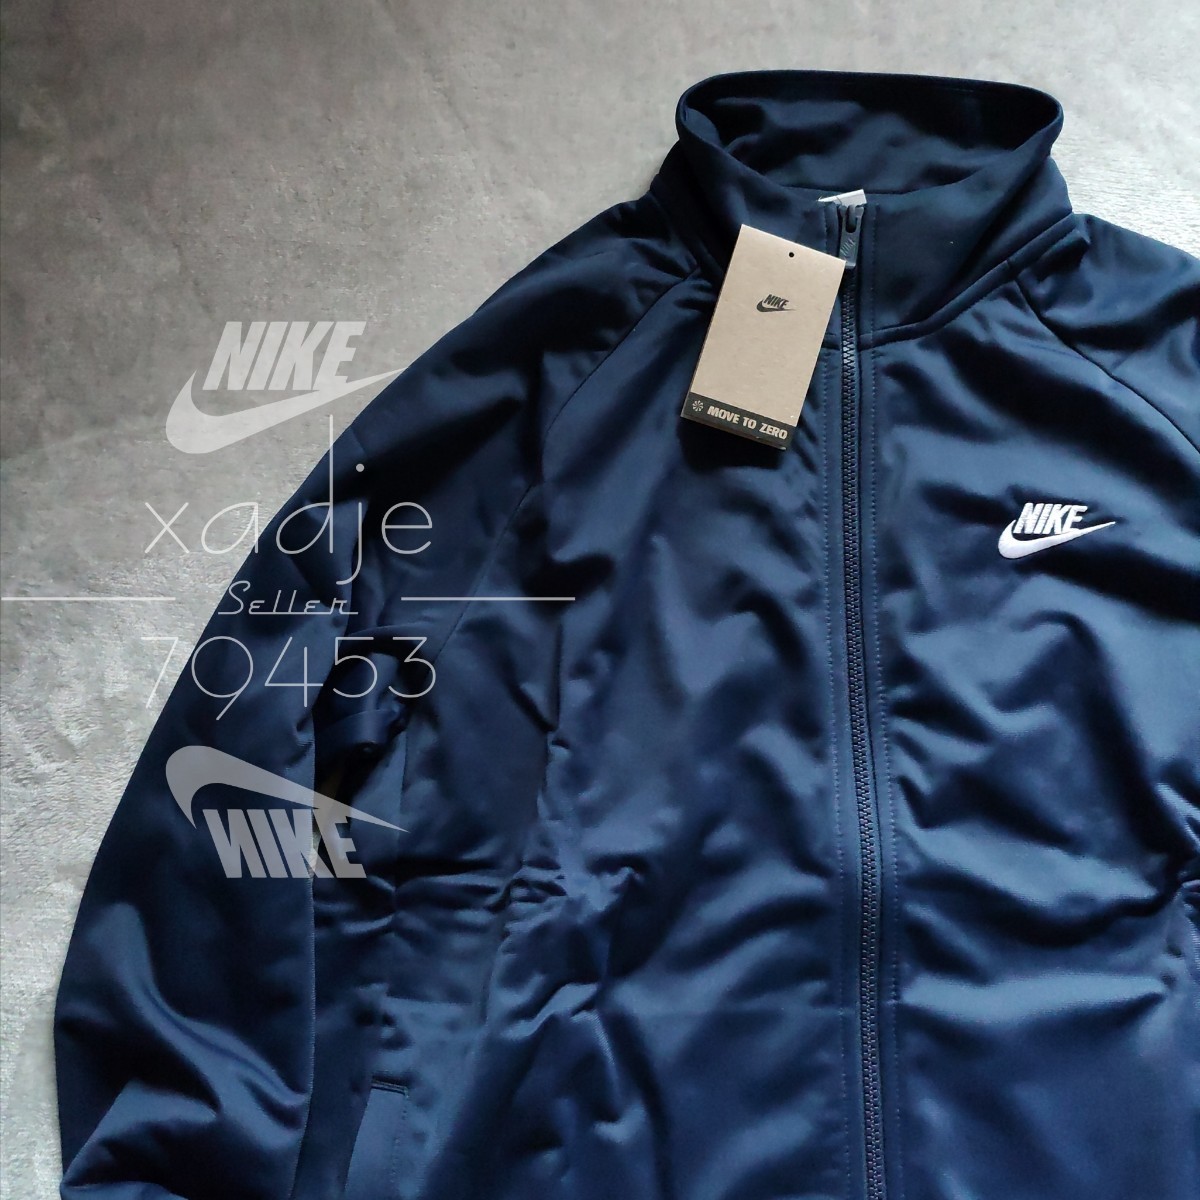  new goods regular goods NIKE Nike jersey top and bottom set jacket pants Logo embroidery setup MOVE TO ZERO navy blue navy white XL